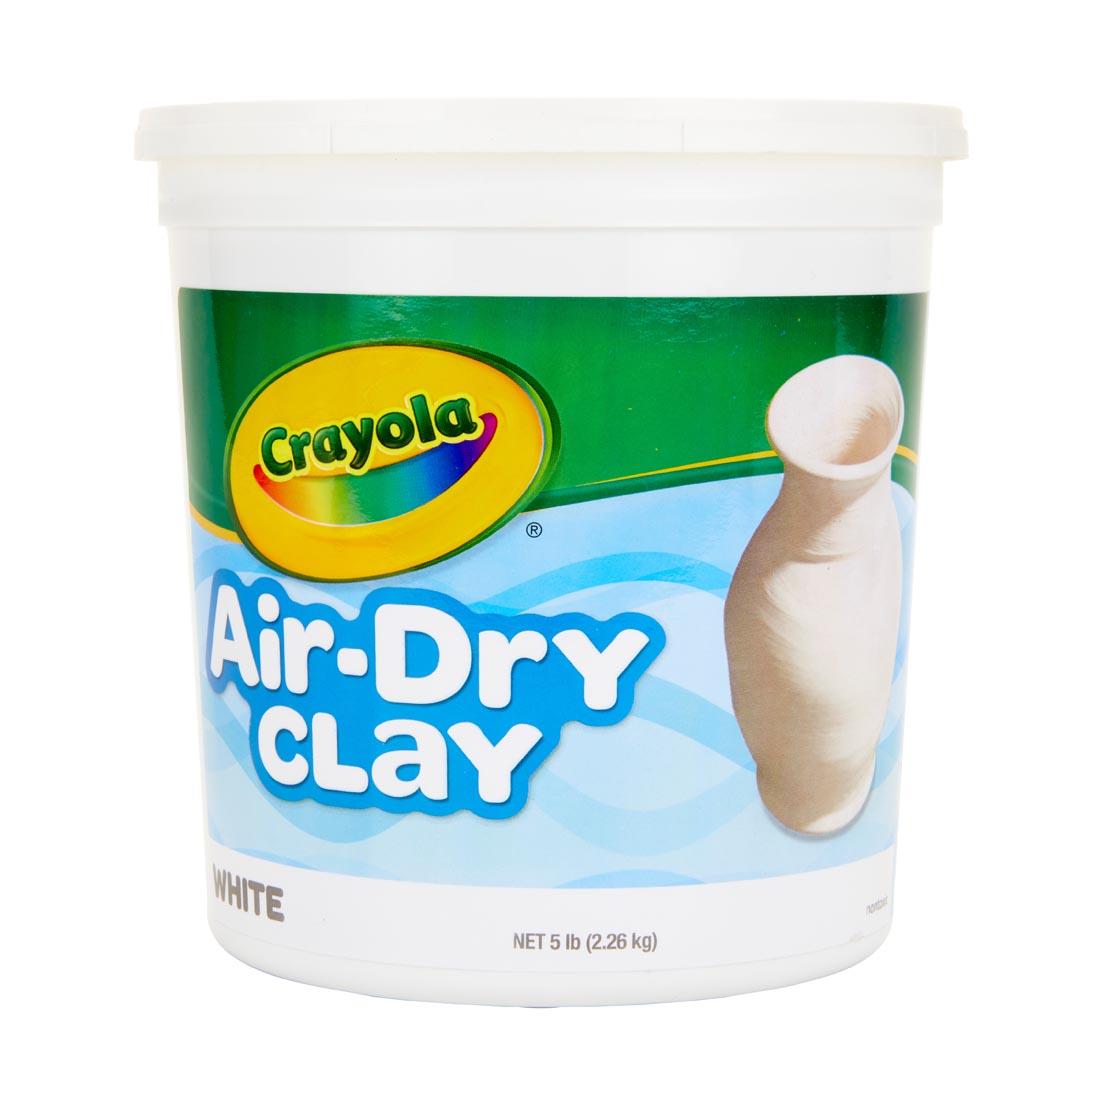 Tub of White Crayola Air-Dry Clay